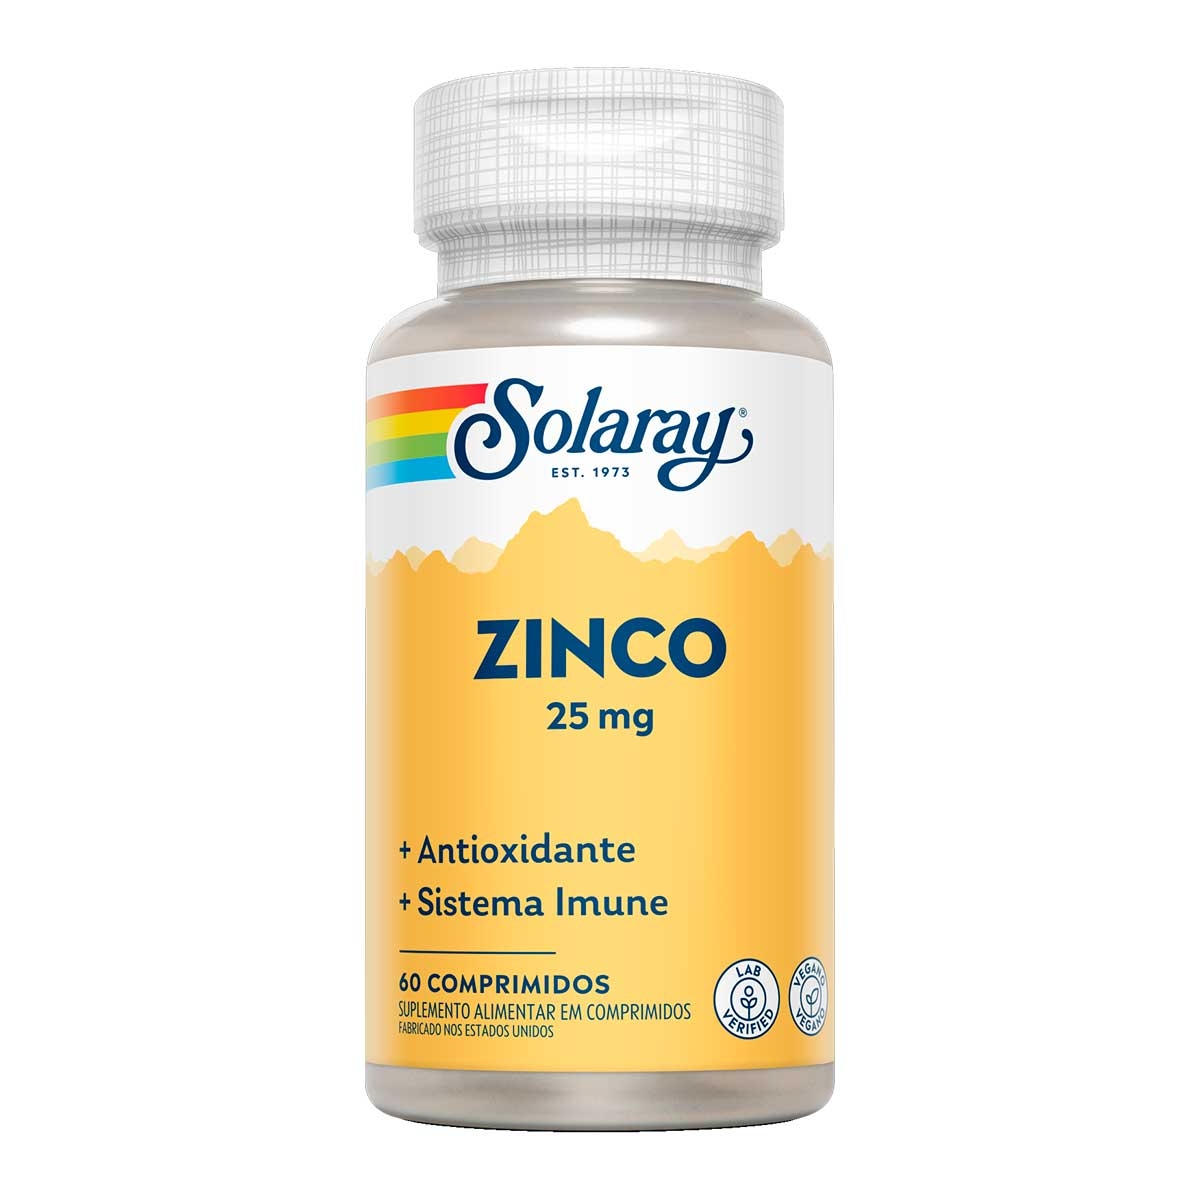 Suplemento Alimentar Zinco 25mg Solaray - 60 Comprimidos